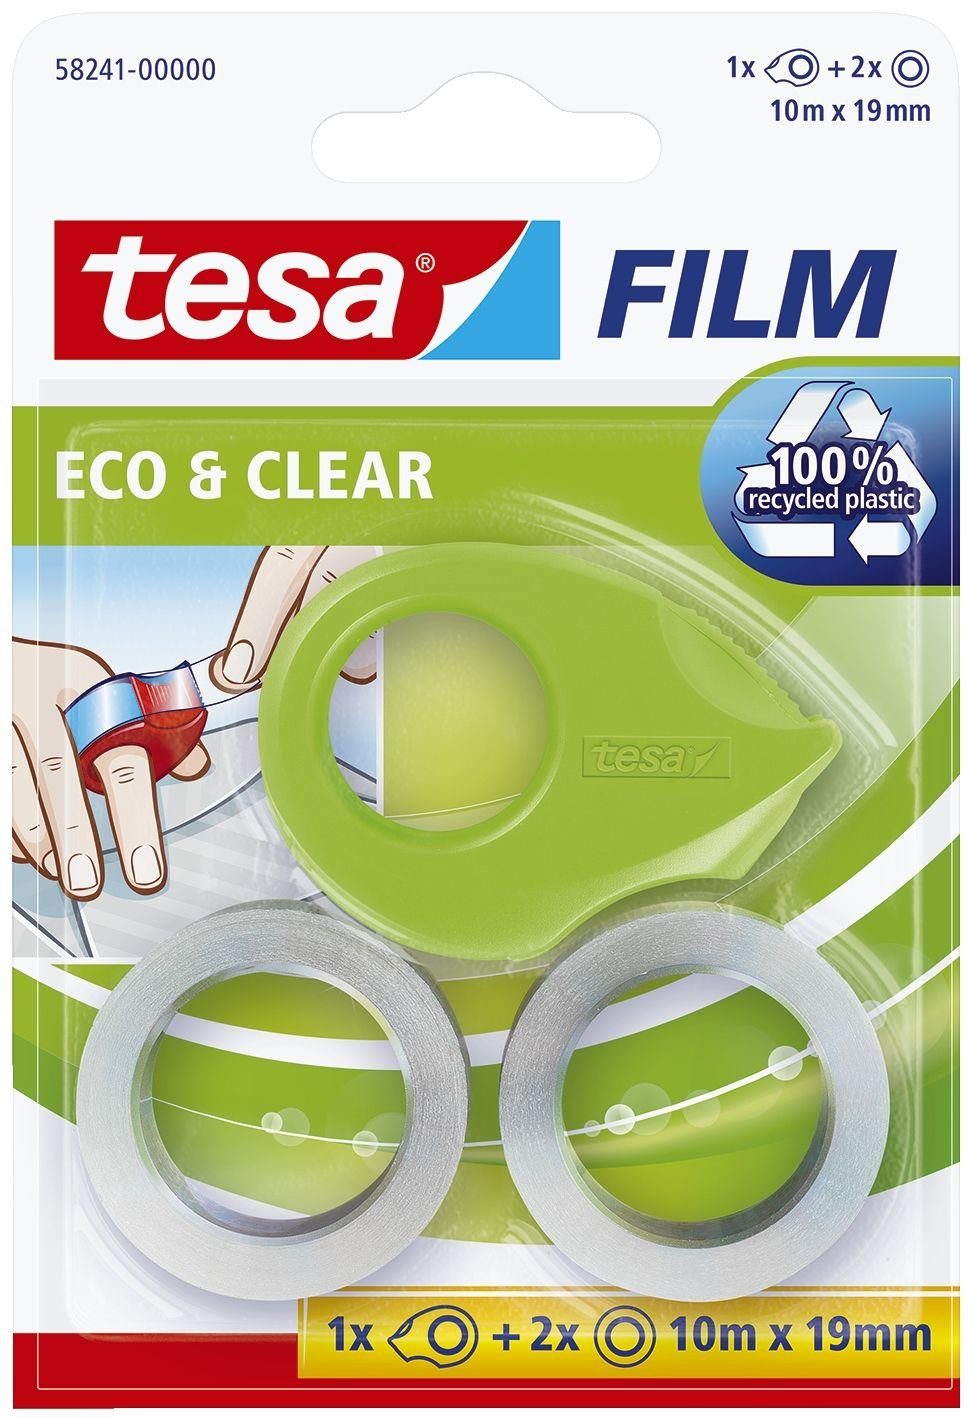 tesa Radiergummi tesafilm Mini Abroller + 2x tesafilm 10m 19mm eco&clear